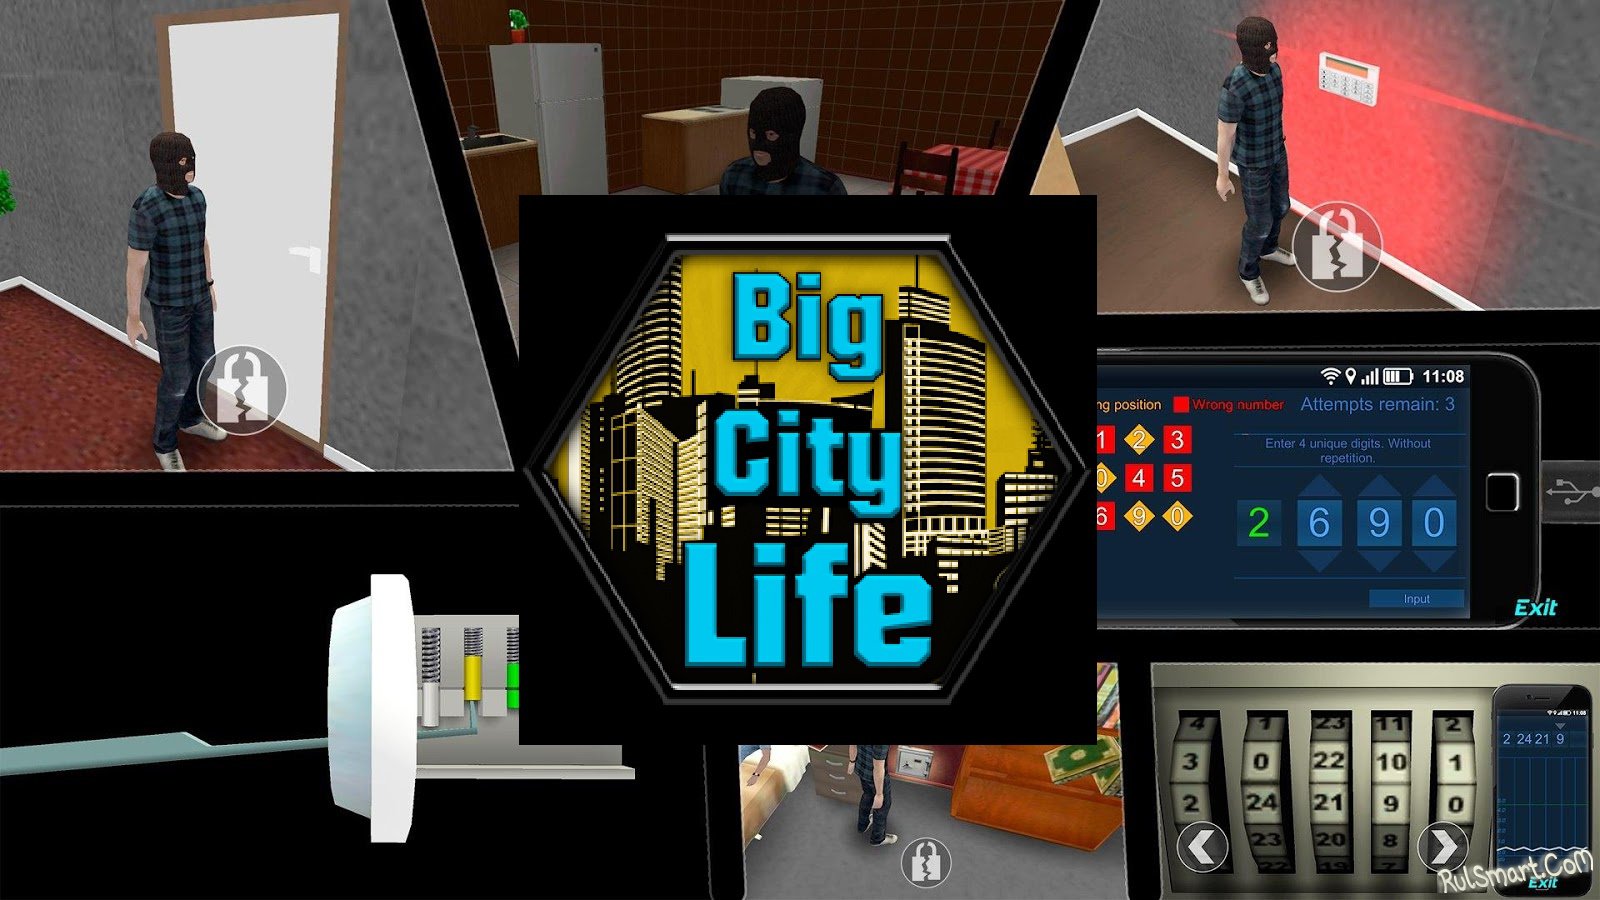 Биг лайф как заработать. Биг Сити симулятор. City Life симулятор. Биг Сити лайф игра. City Life на андроид игра.